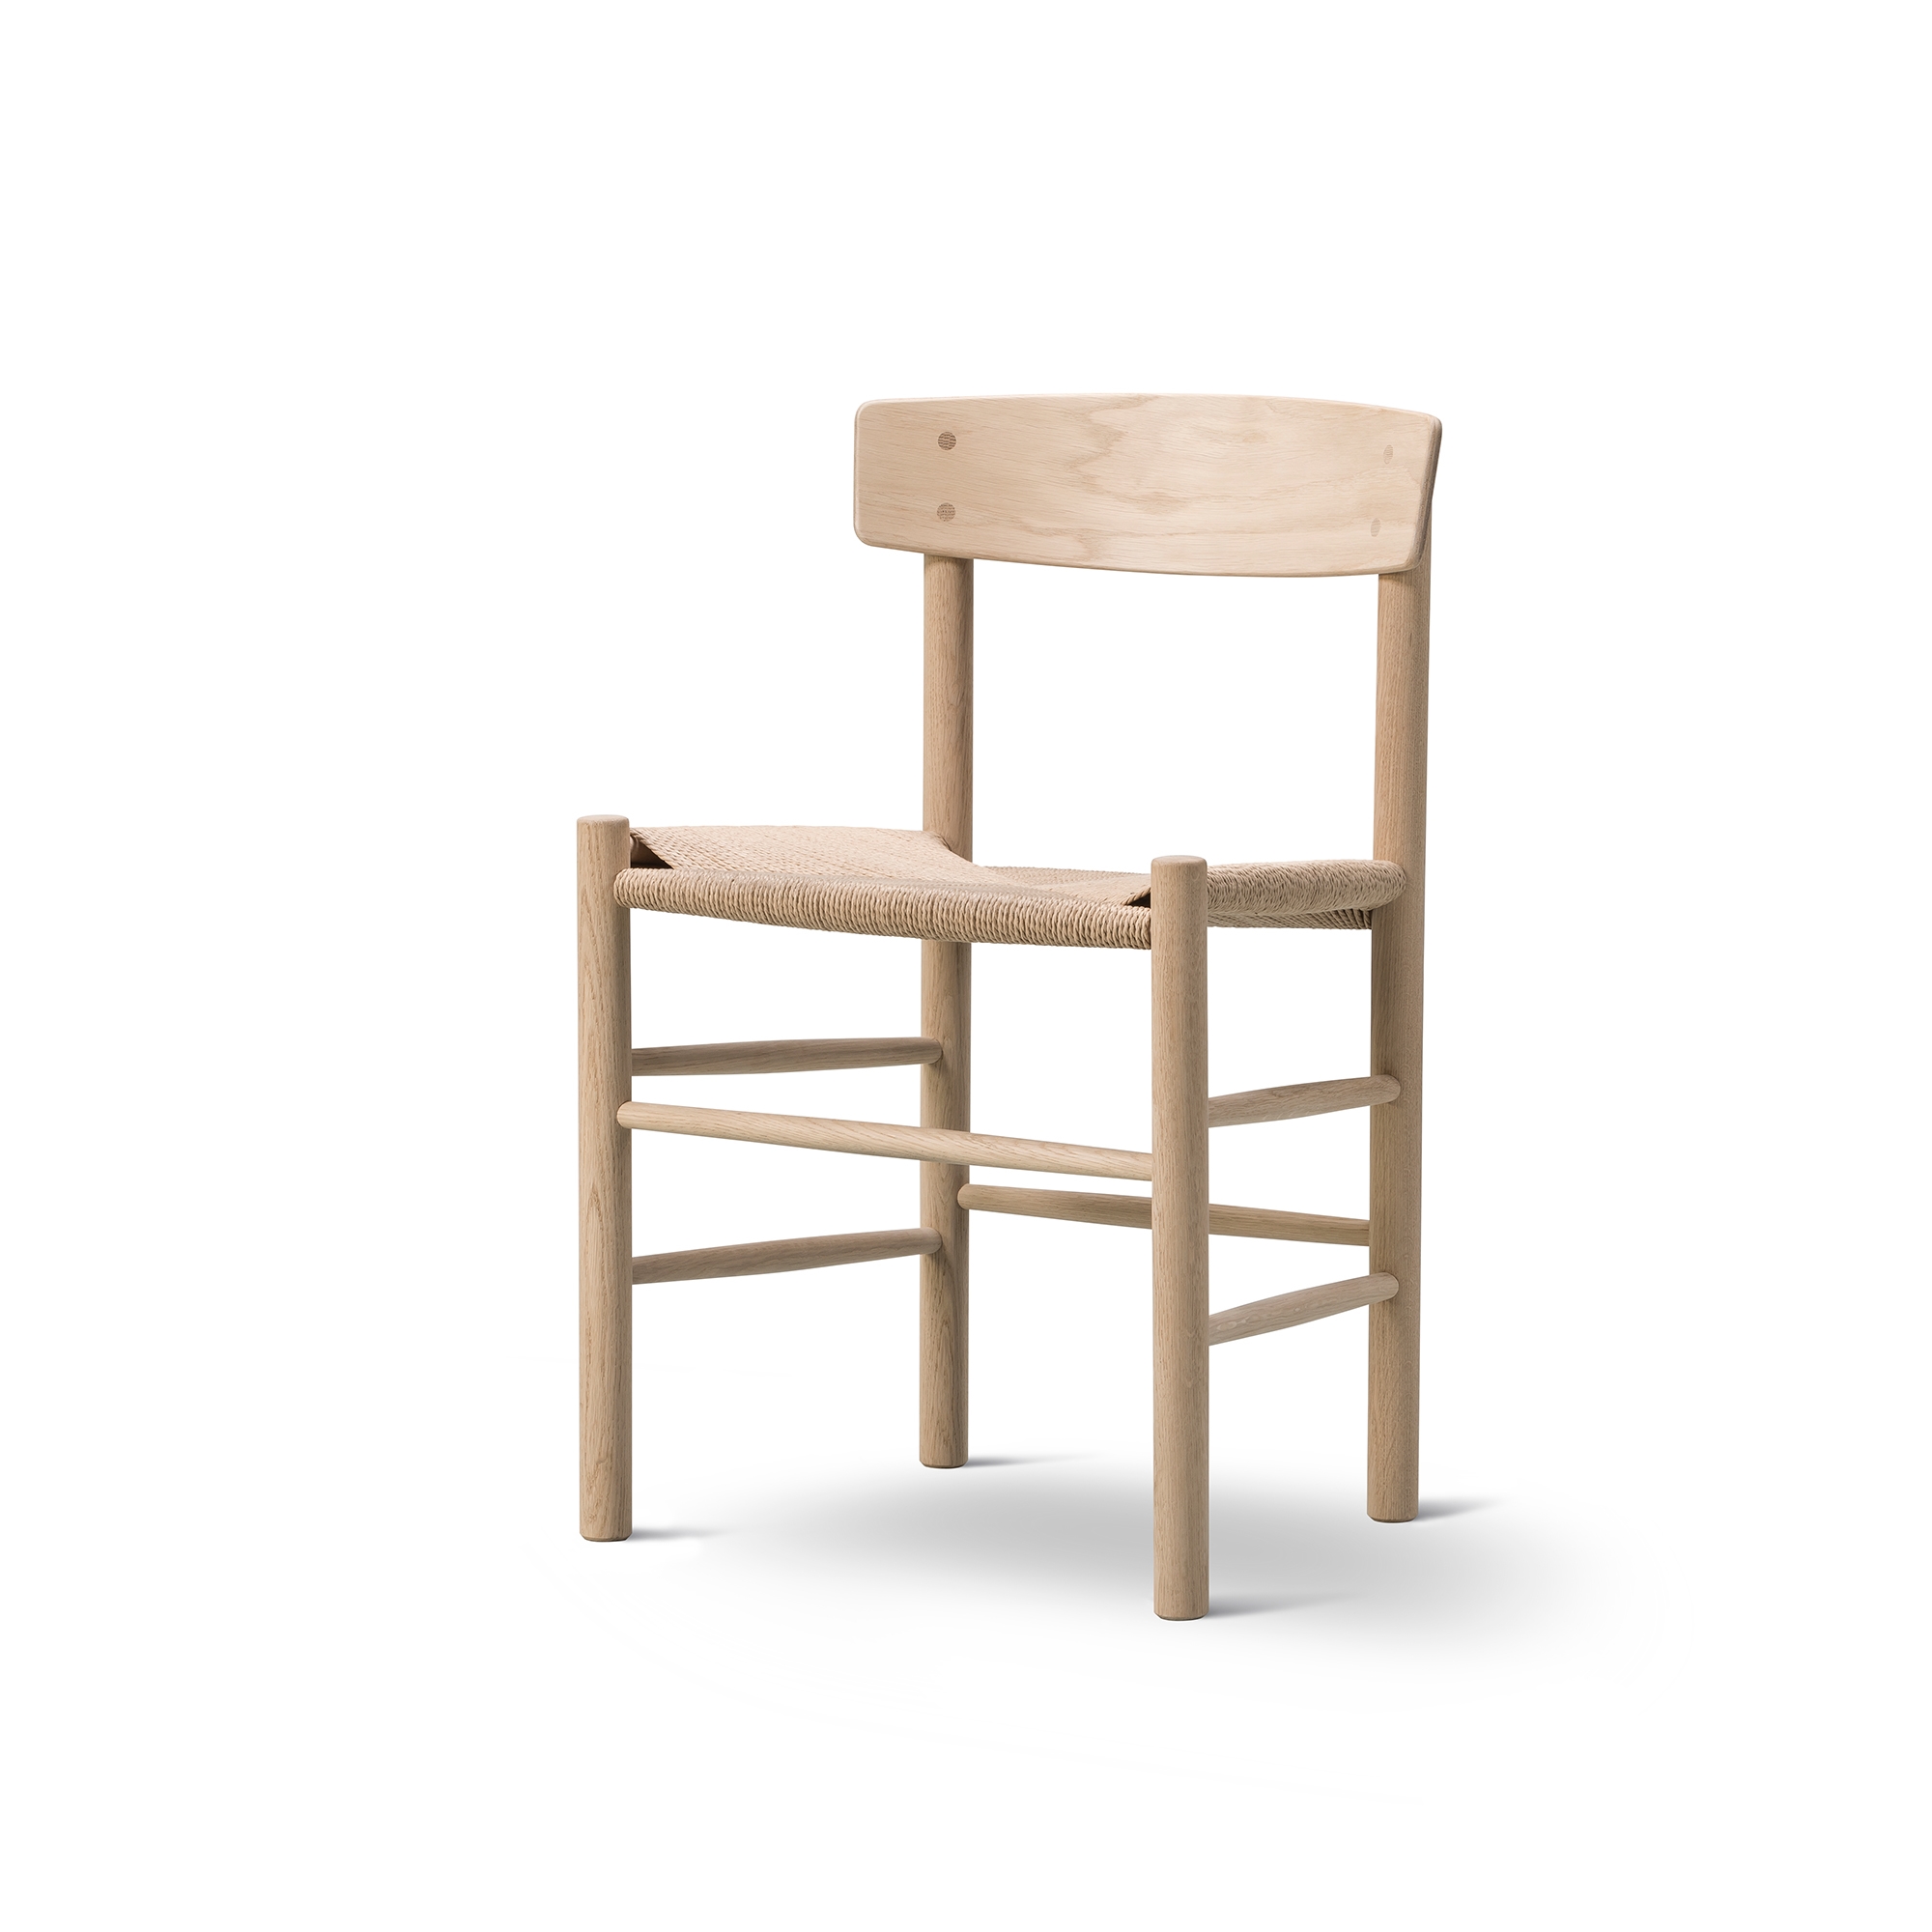 Fredericia Furniture Mogensen J39 Dining Chair Soap-treated Oak/Paper Yarn